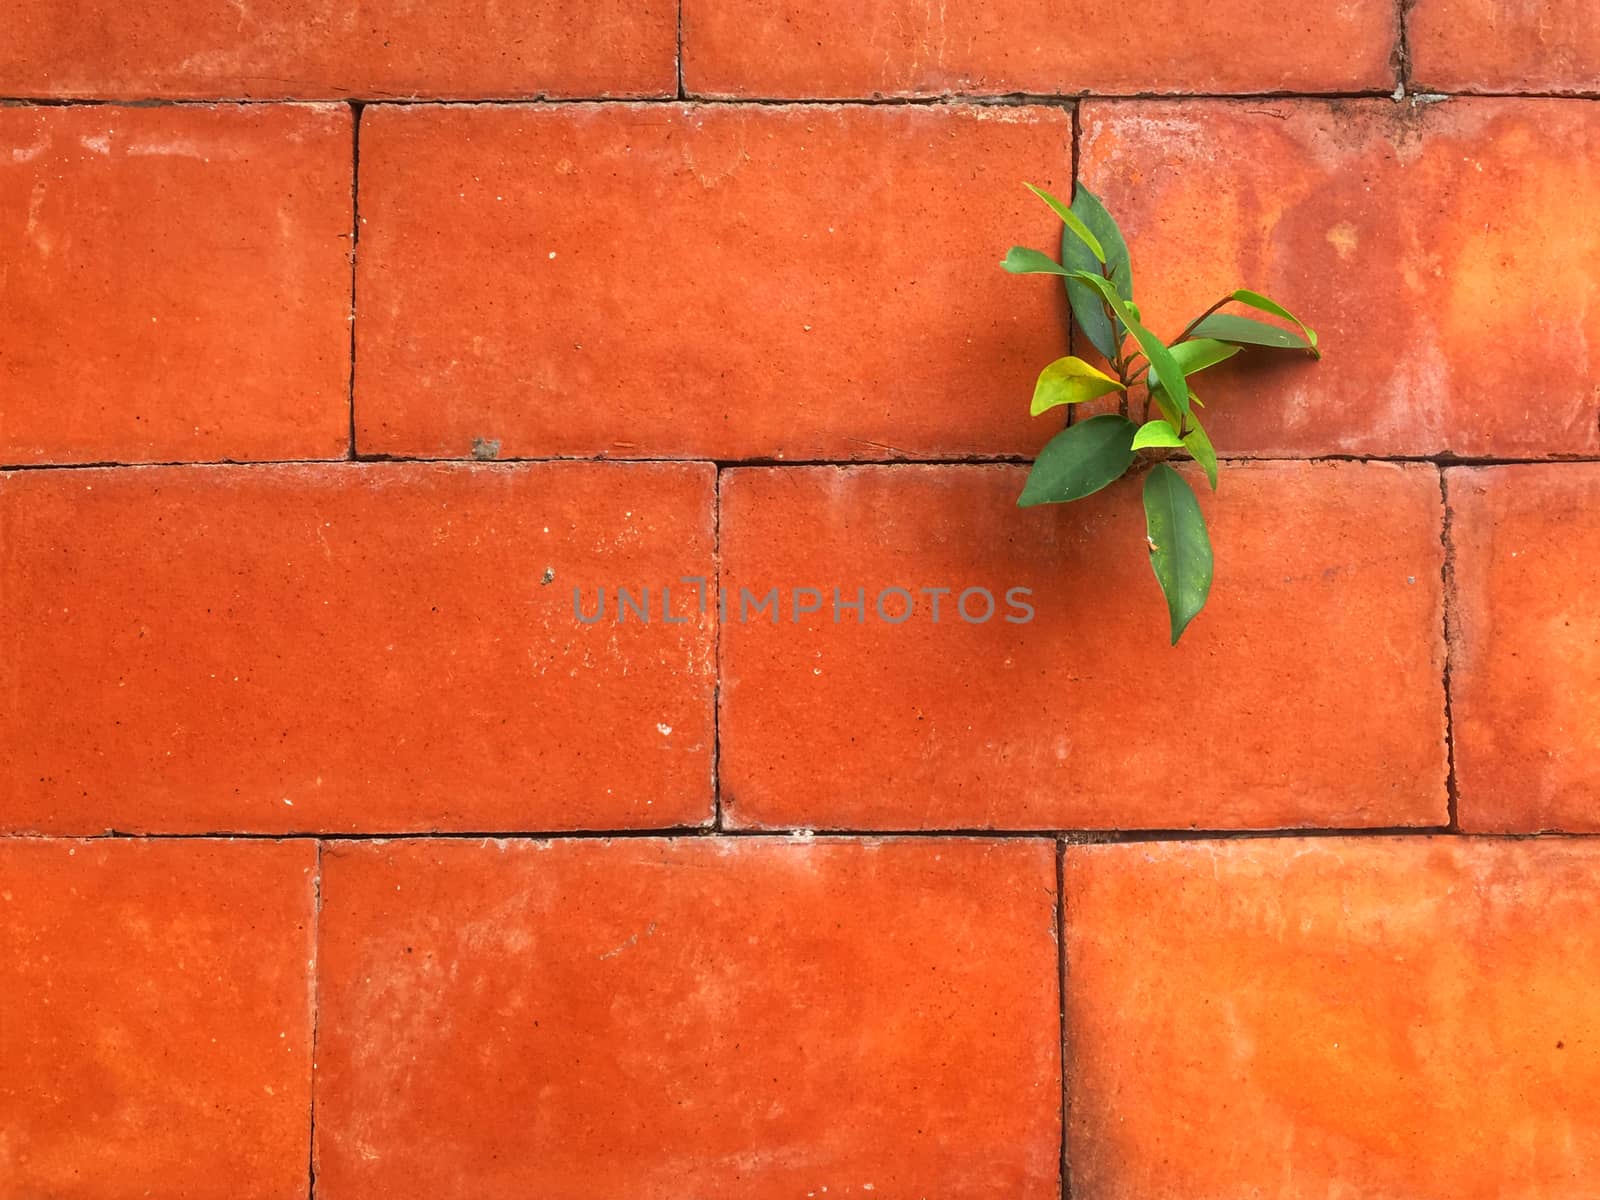 Small tree growing on an orange tile wall.